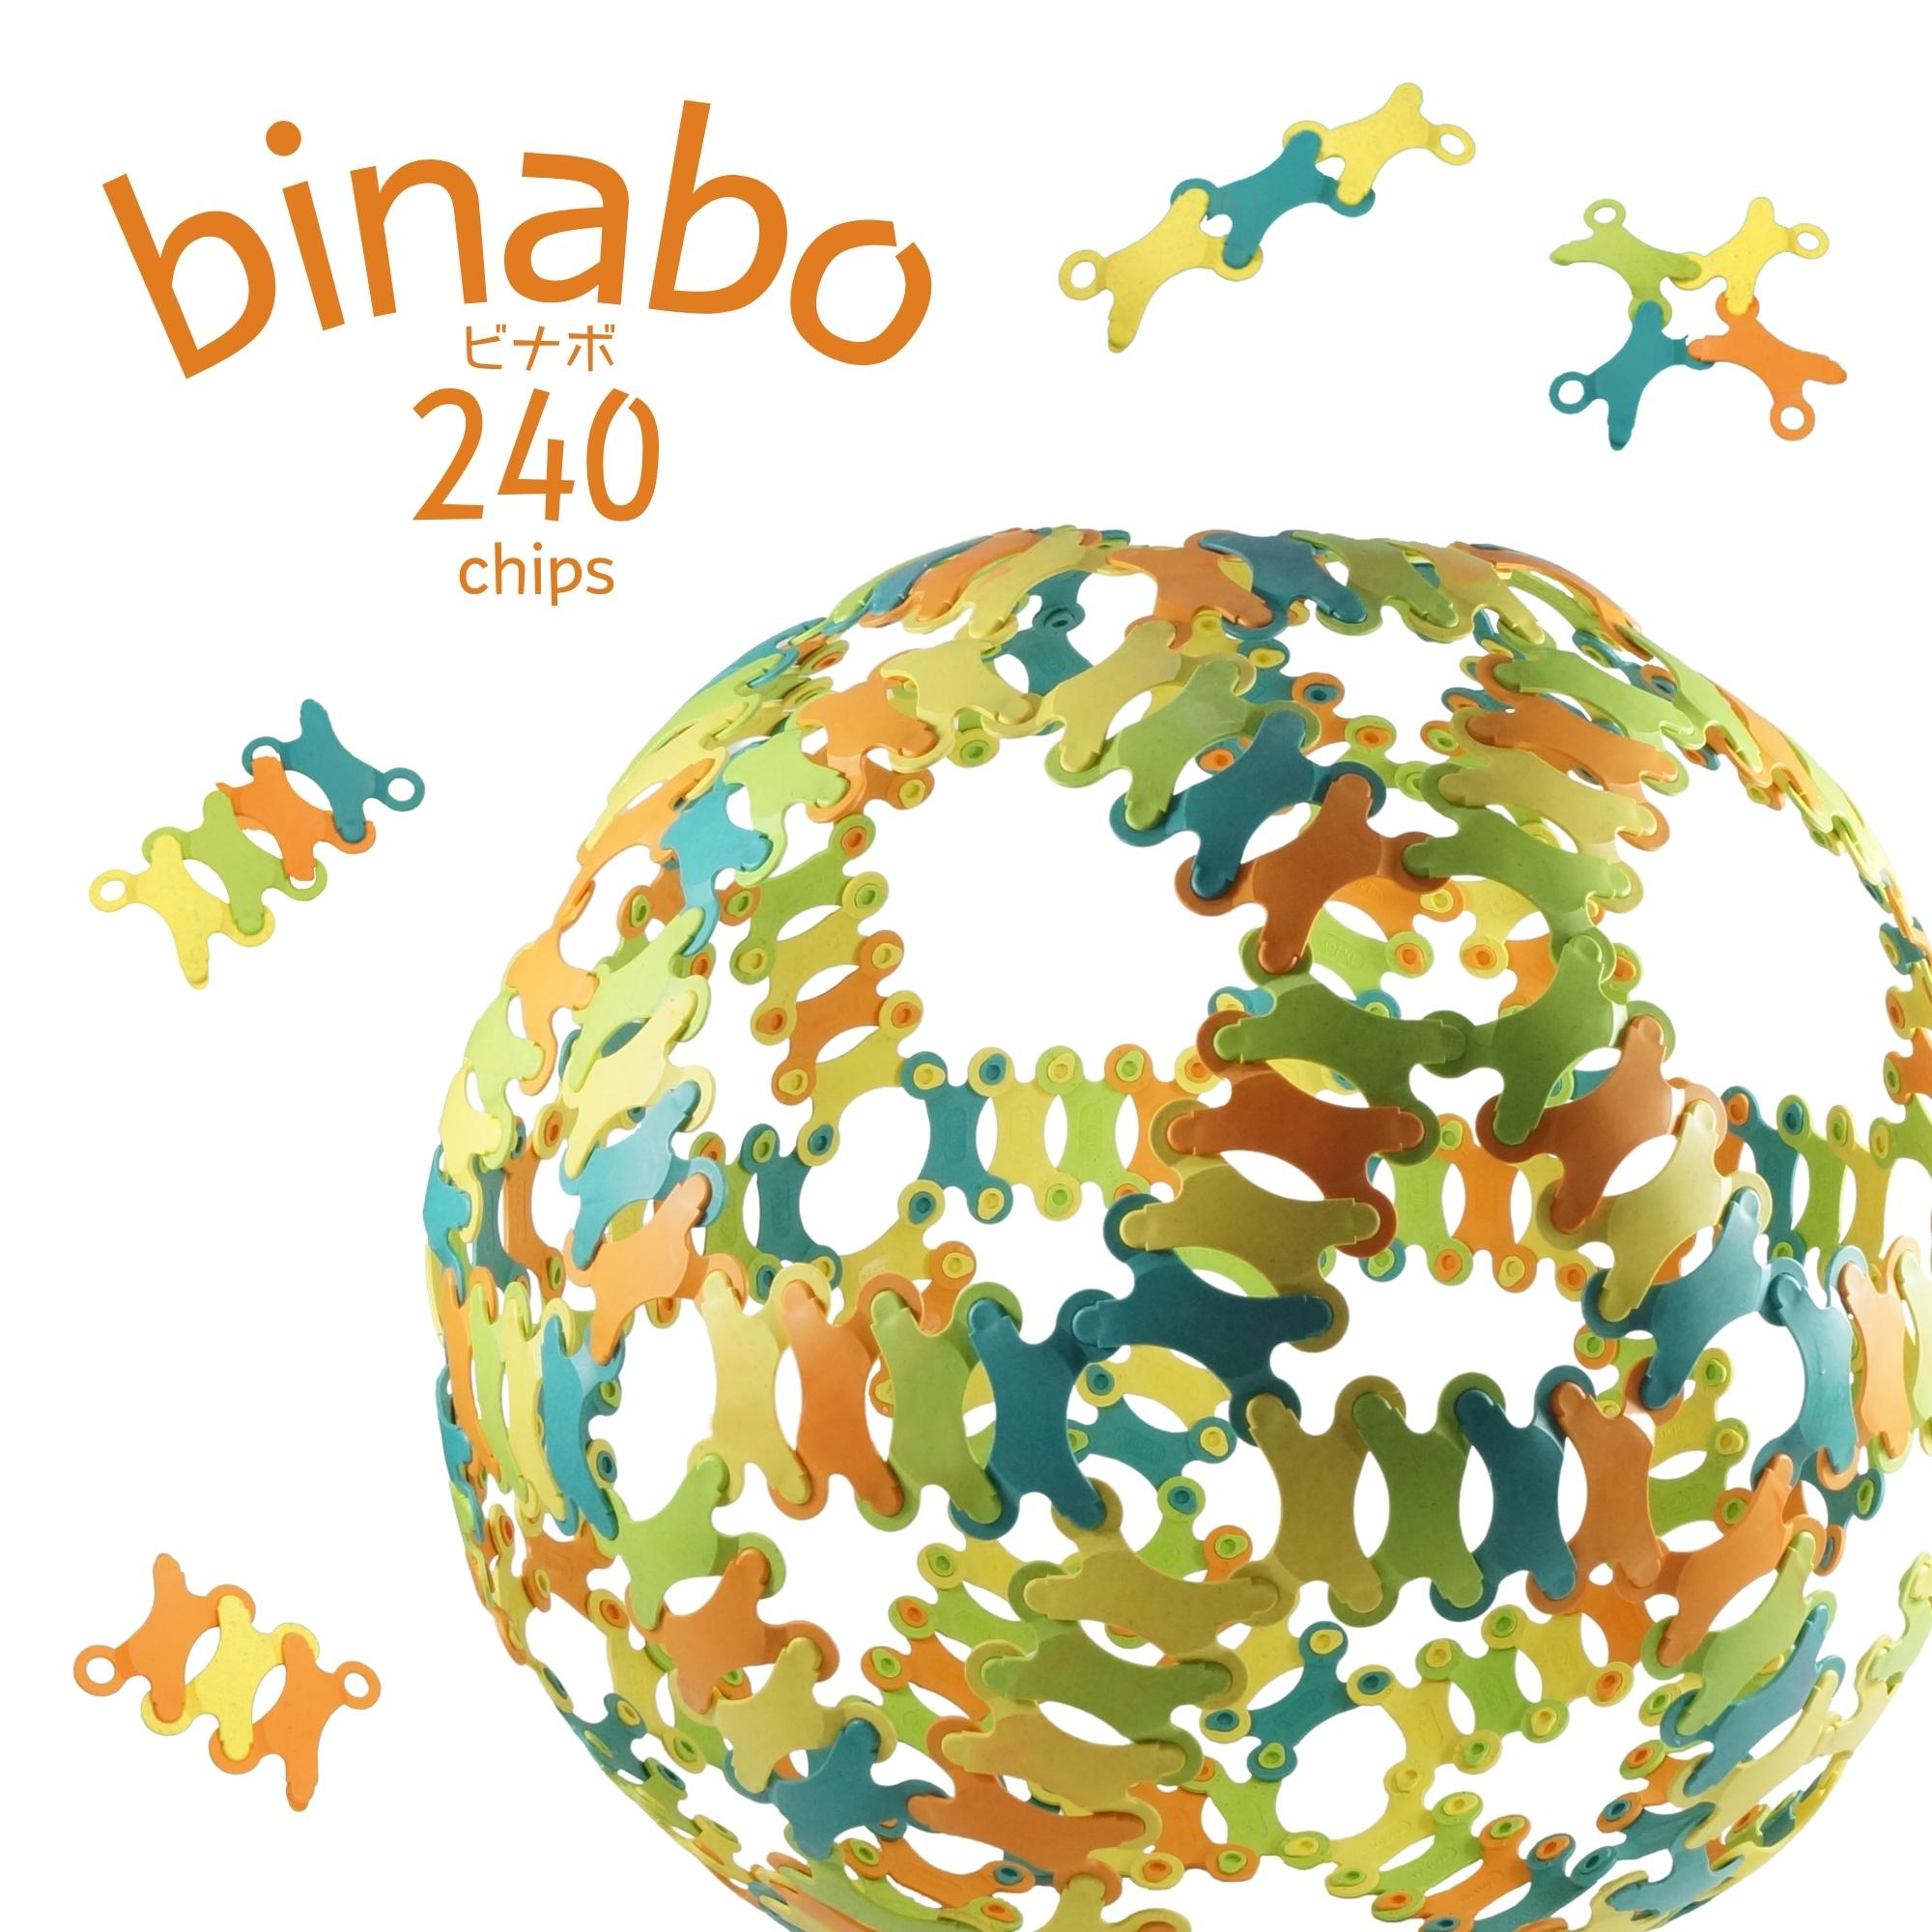 【50 OFF楽天スーパーSALE】binabo ビナボ 240チップ入り ブロック おもちゃ 組み立て 外遊び 公園遊び おうち遊び 知育玩具 5歳 6歳 7歳 8歳 男の子 女の子 誕生日 バースデー プレゼント ドイツ 創造力